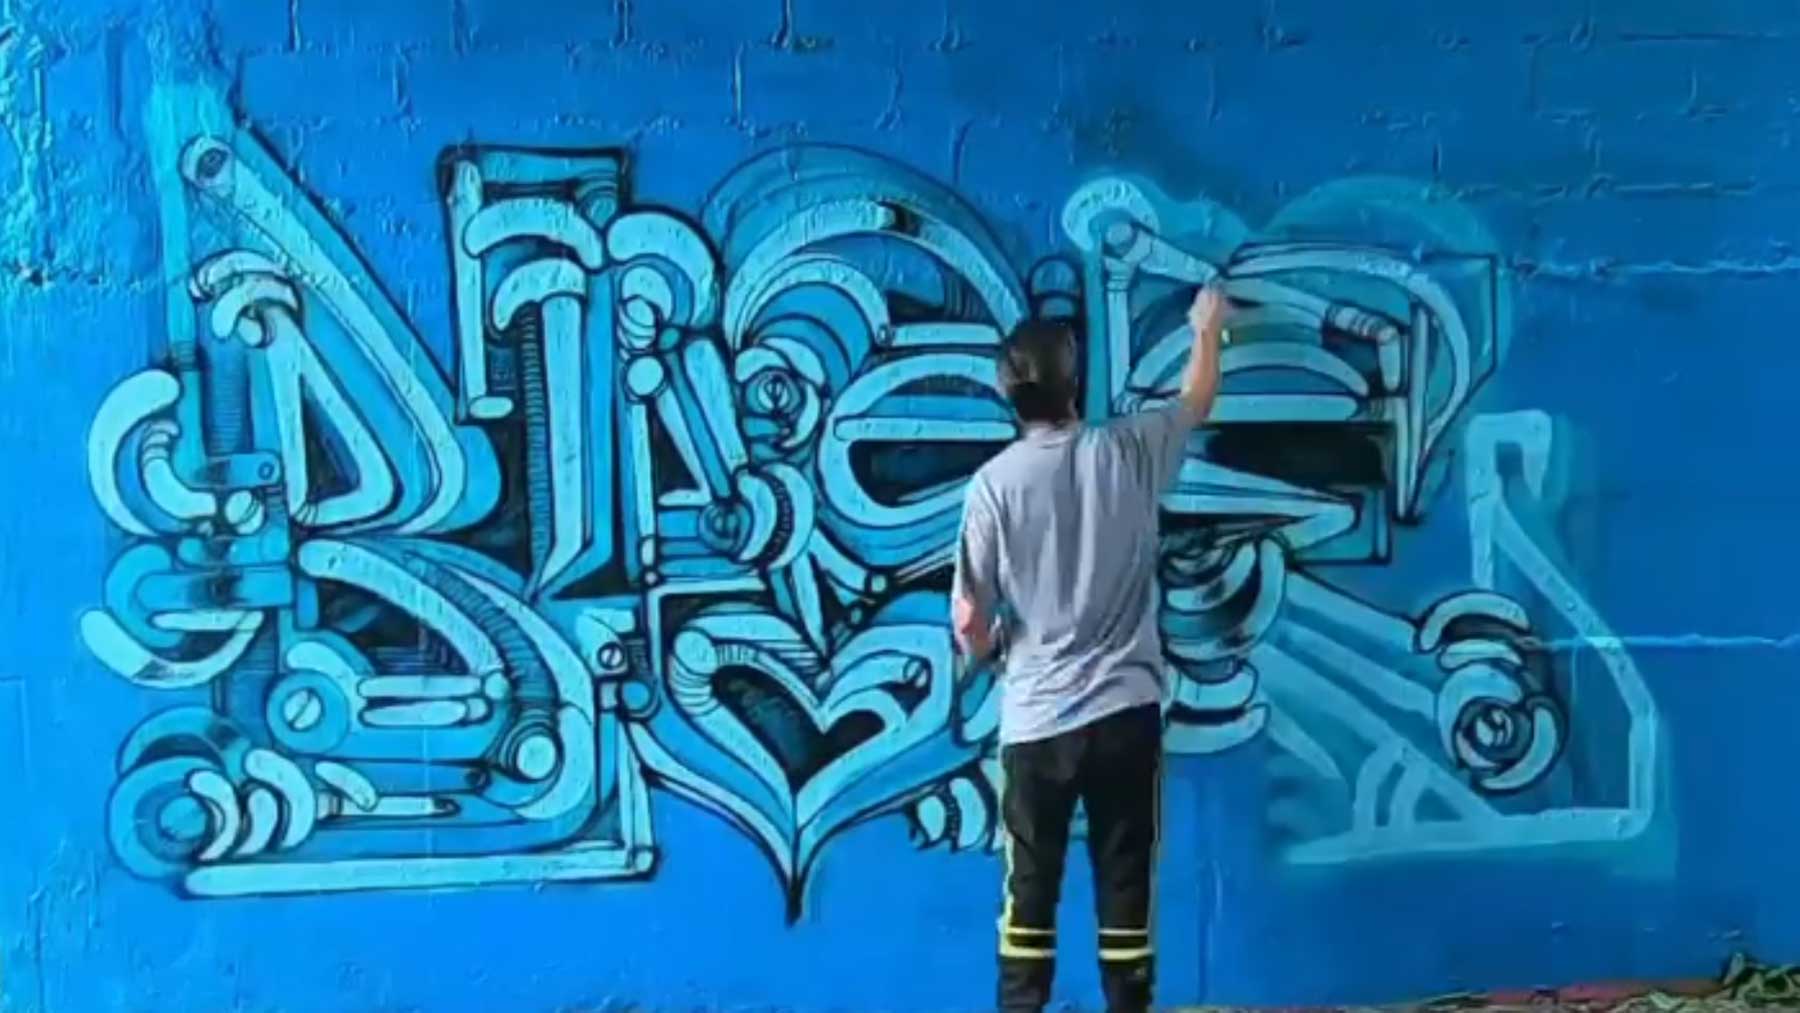 Timelapse: 55 Minuten Graffiti-Sprühen in unter 1 Minute Le-MEc-Blase-graffiti-mural-timelapse-making-of 